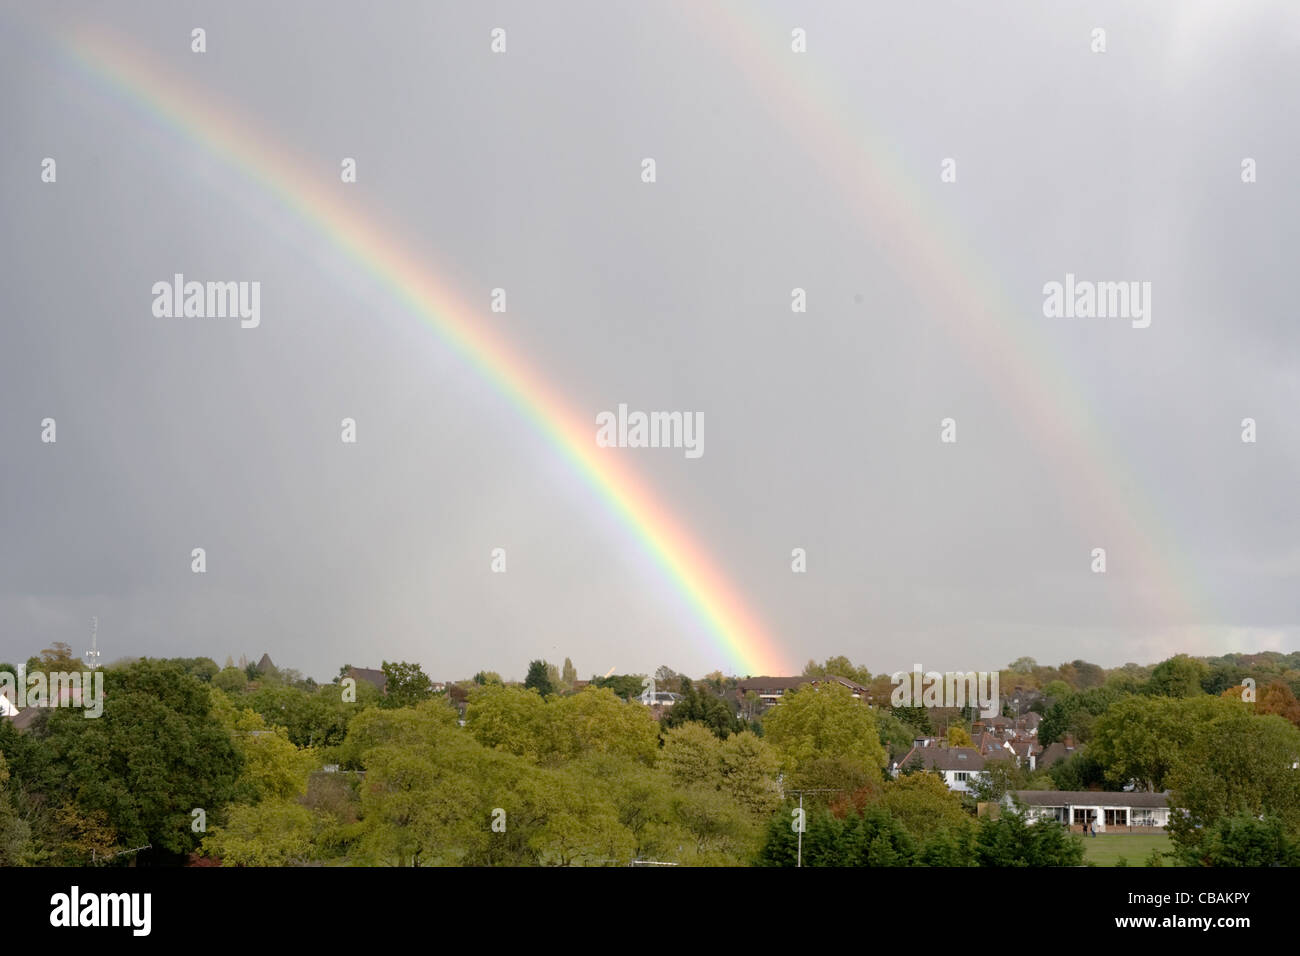 Zwei oder doppelten Regenbogen über Hampstead London stumpf grau grauer Himmel Herbst Tag Stockfoto